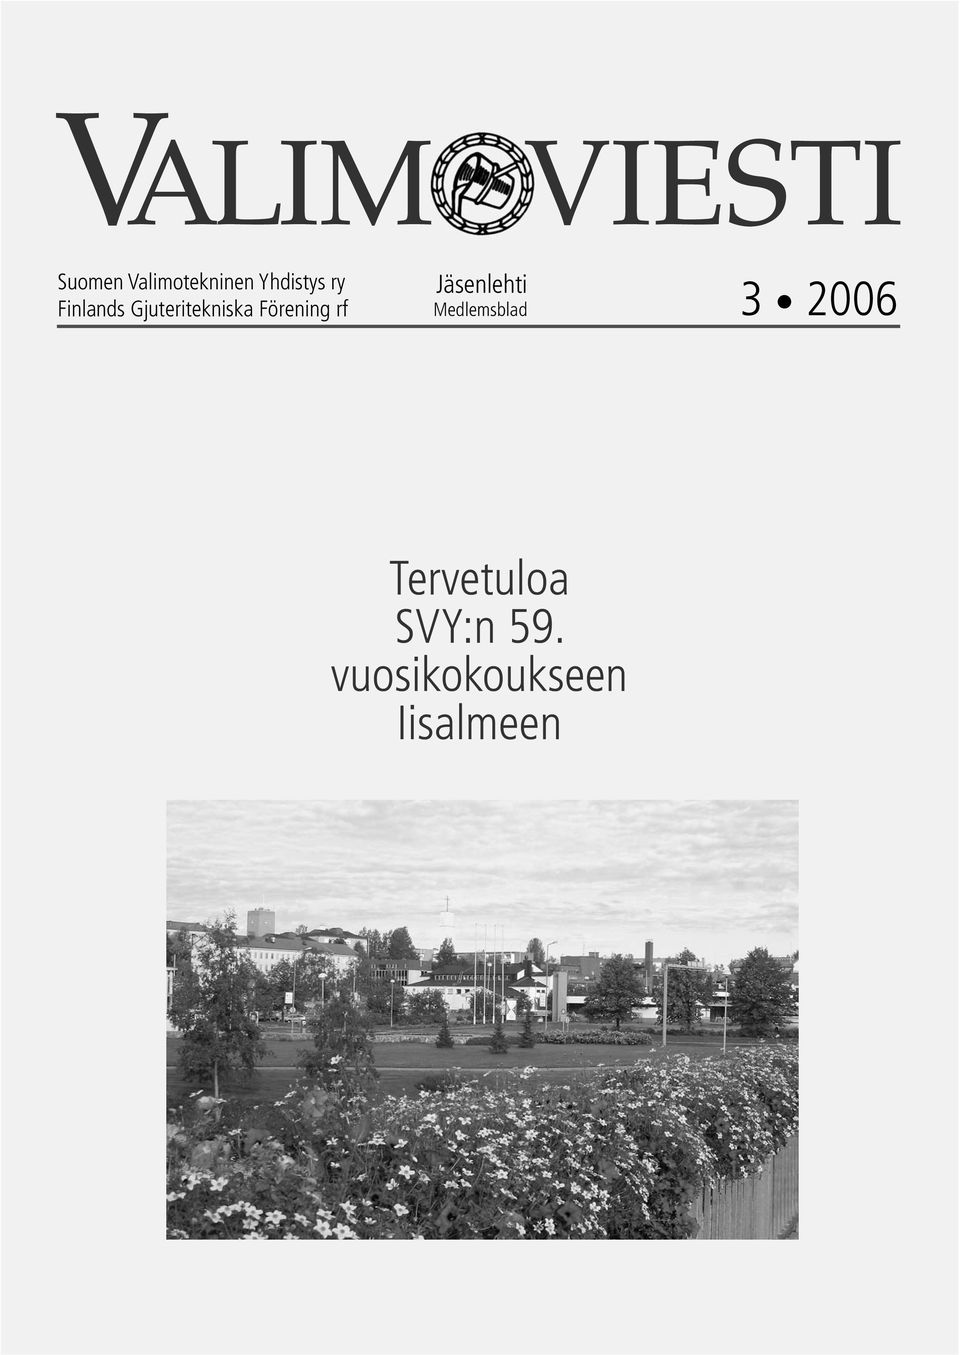 Jäsenlehti Medlemsblad 3 2006 Tervetuloa